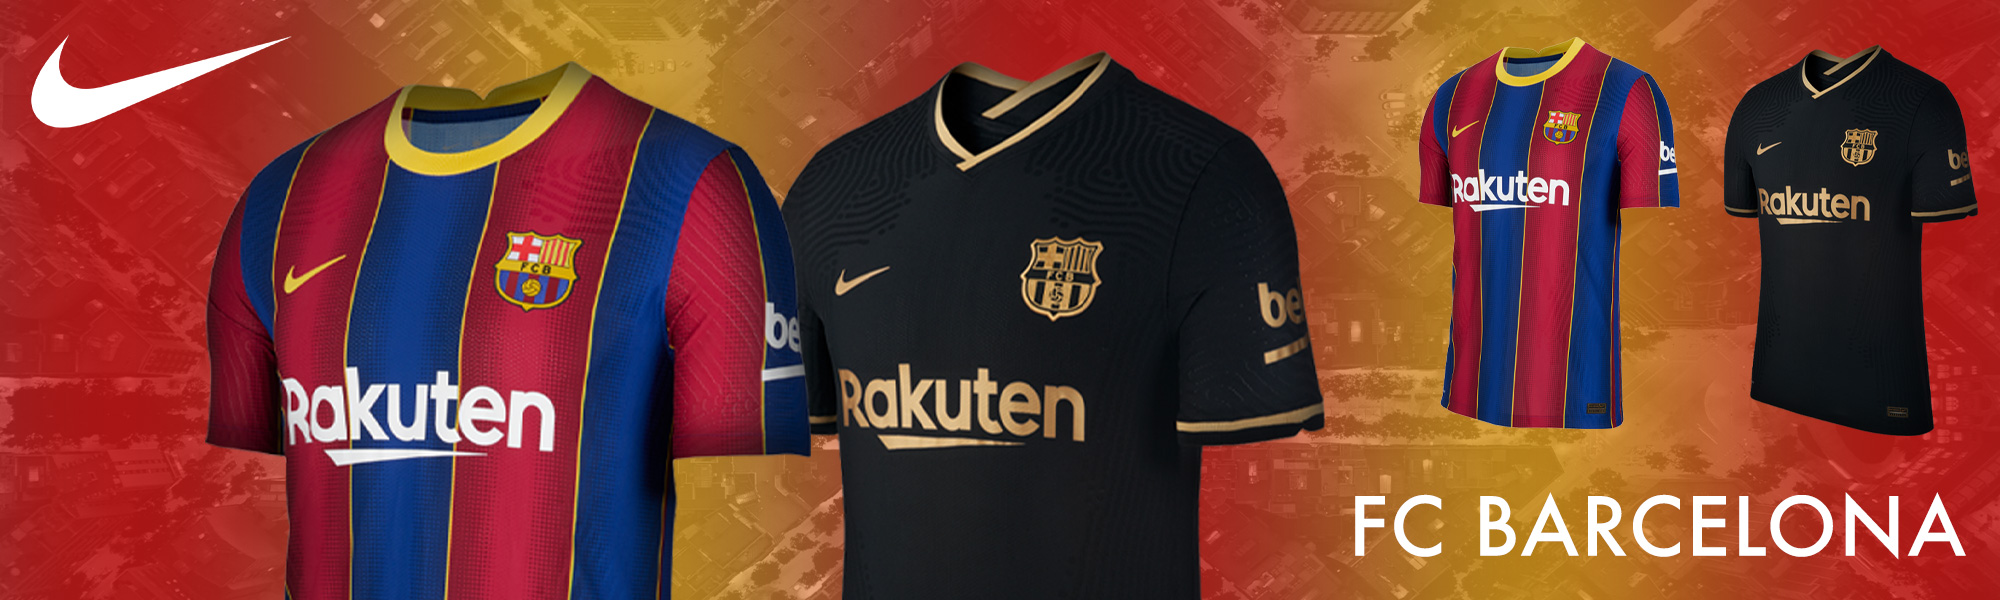 barcelona jersey 2020 price